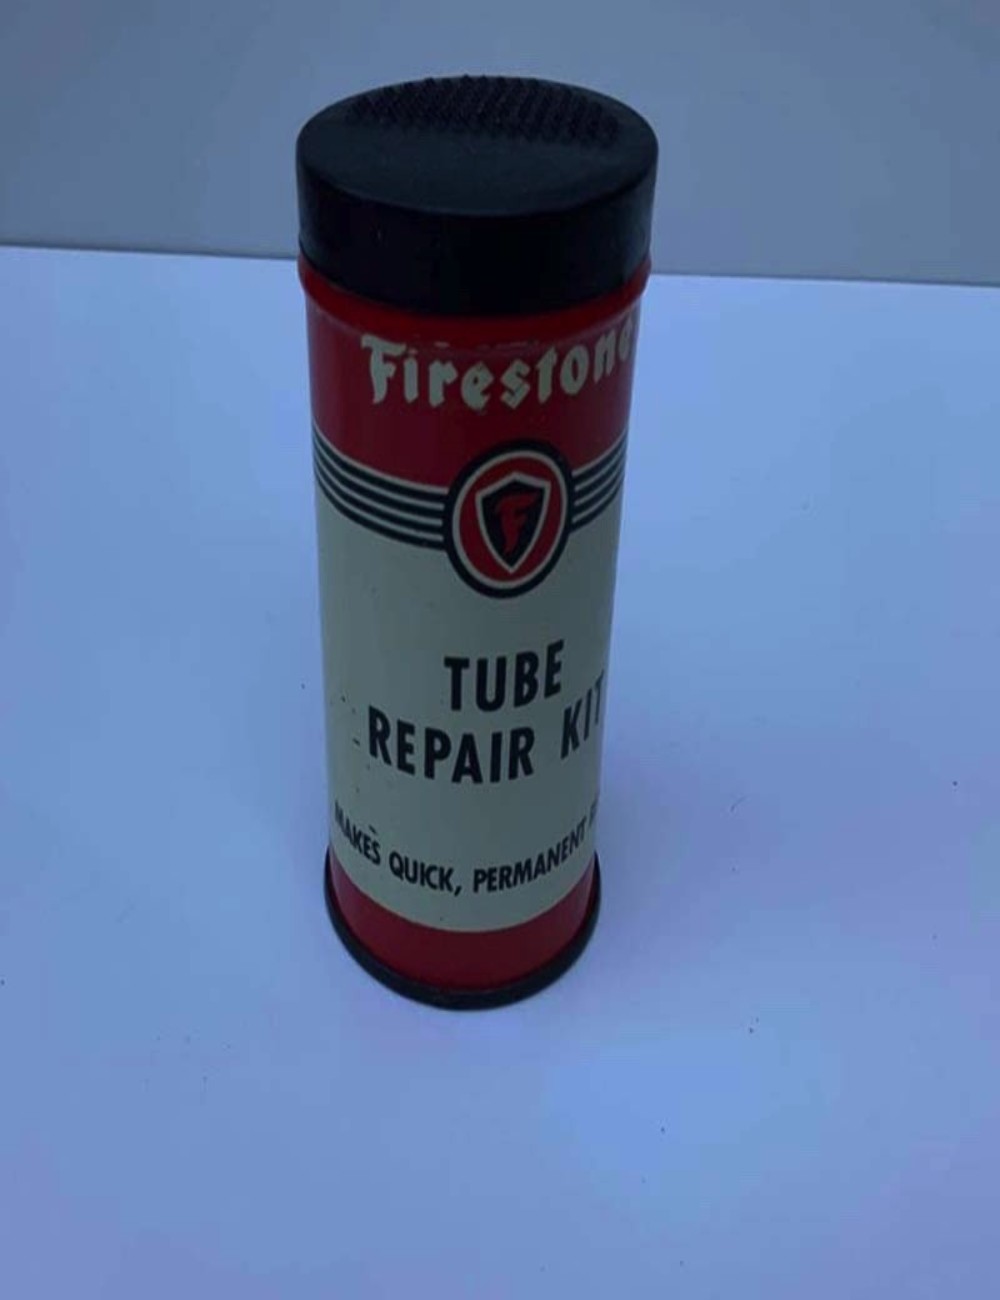 Firestone Tube Repair kit. Altezza 11 cm